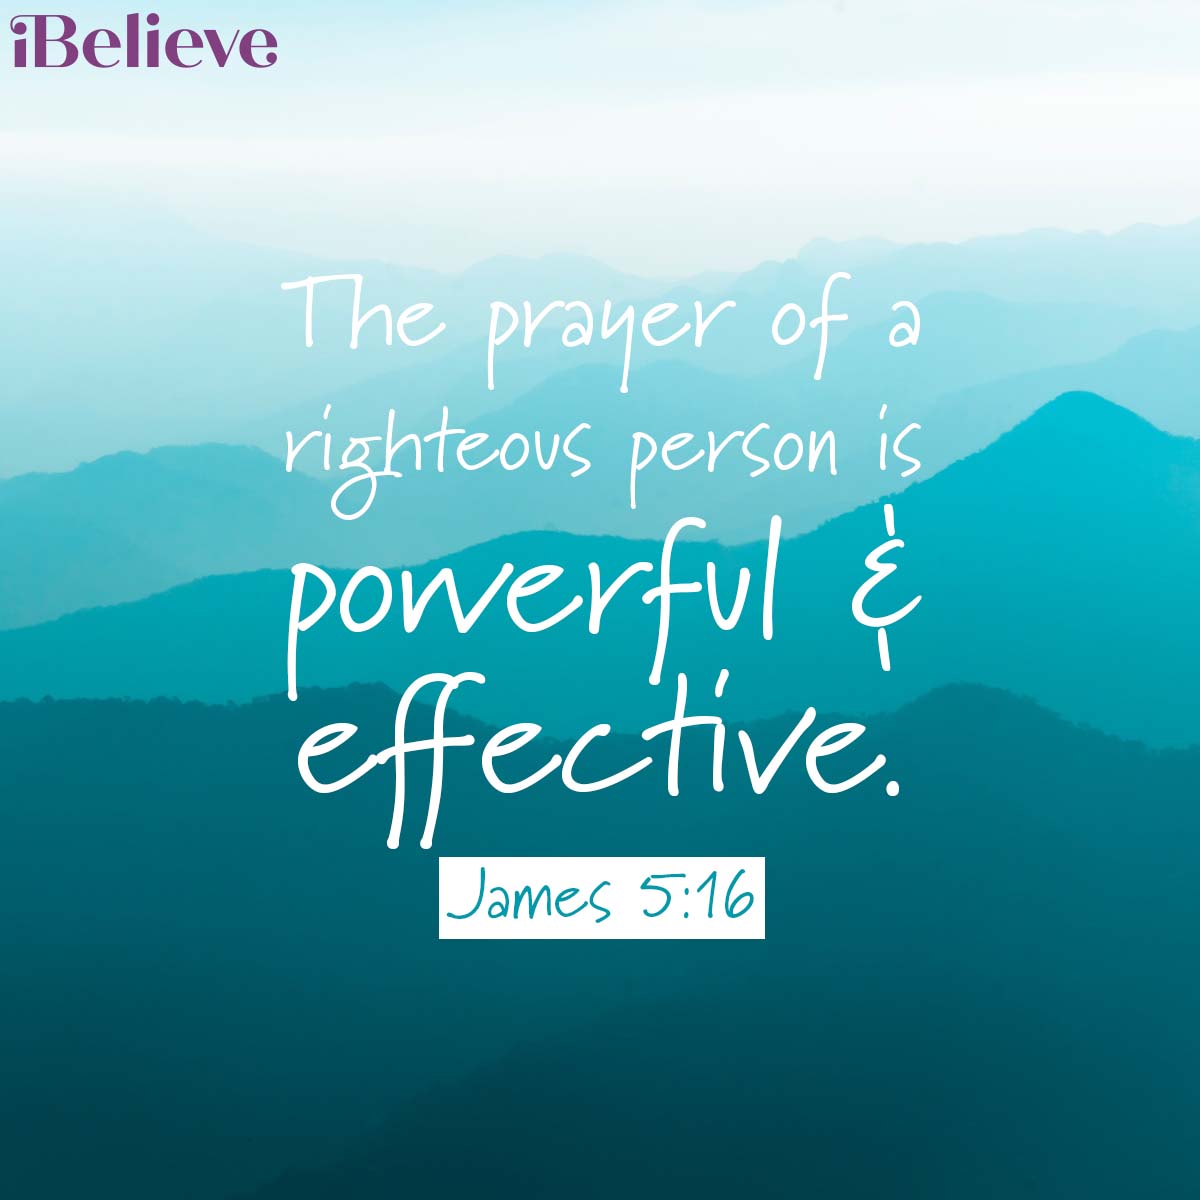 James 5:16, inspirational image